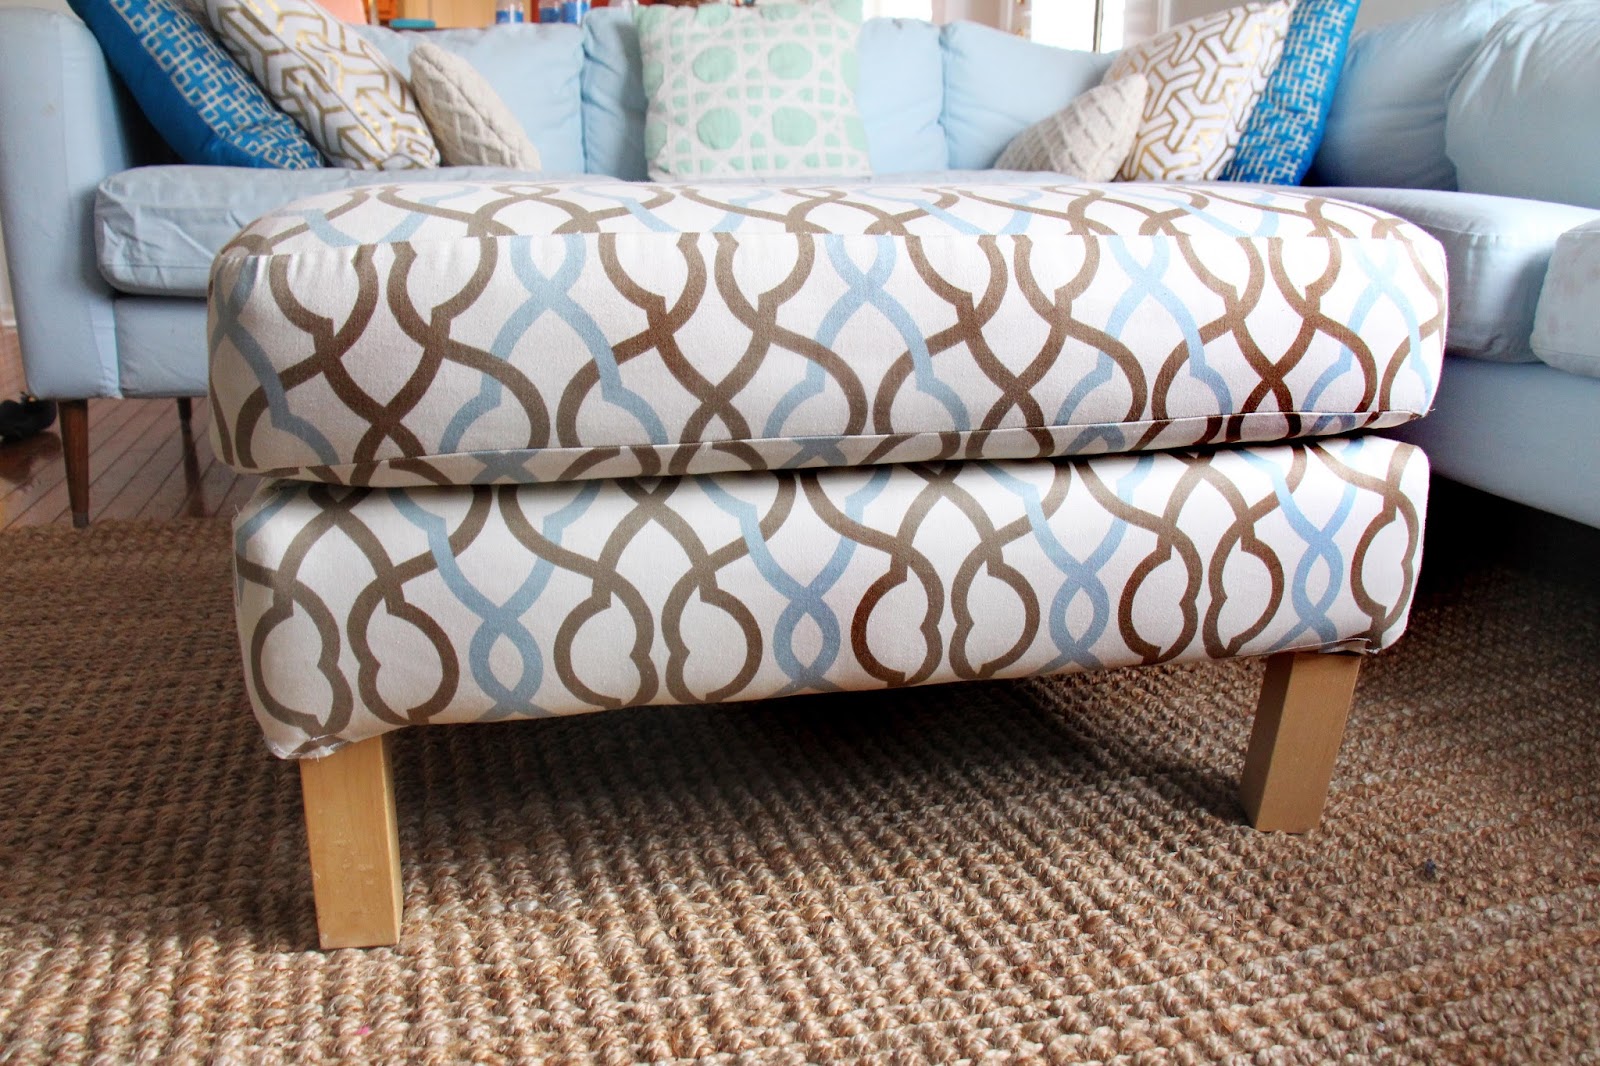 NEW IKEA KARLSTAD Footstool Ottoman Cover Slipcover Multi Patterns 